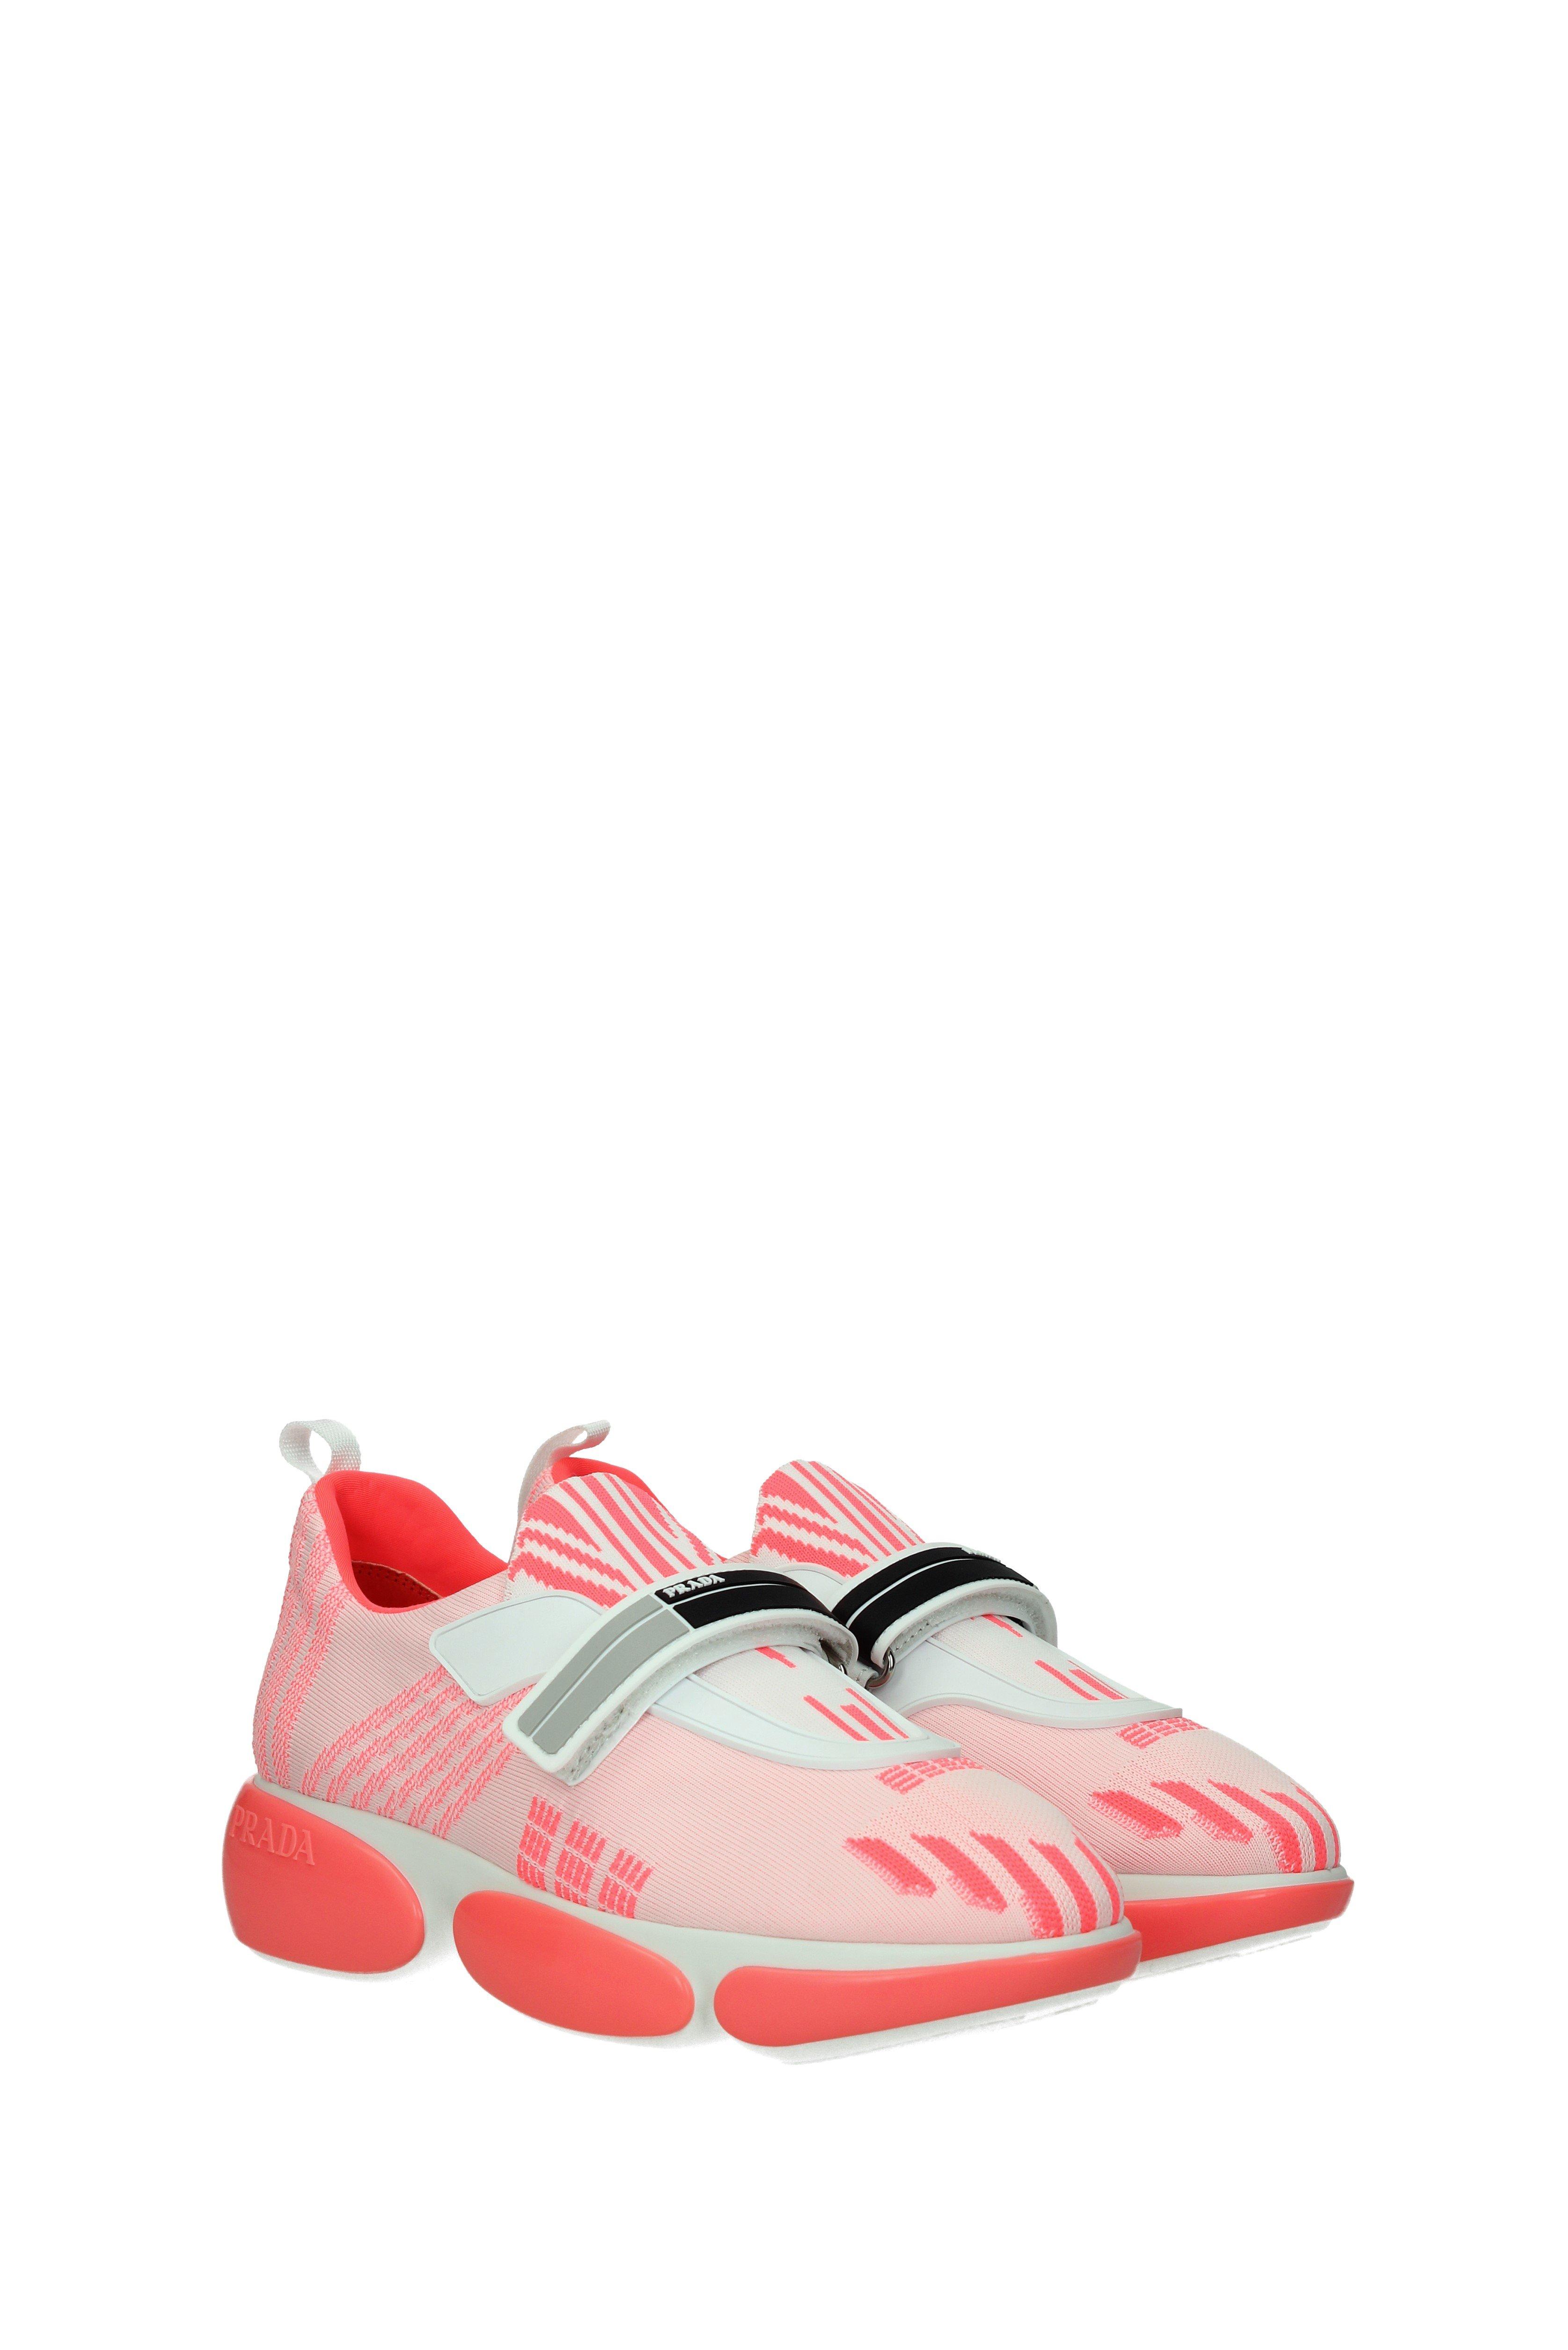 Prada Pink Sneakers - Lyst